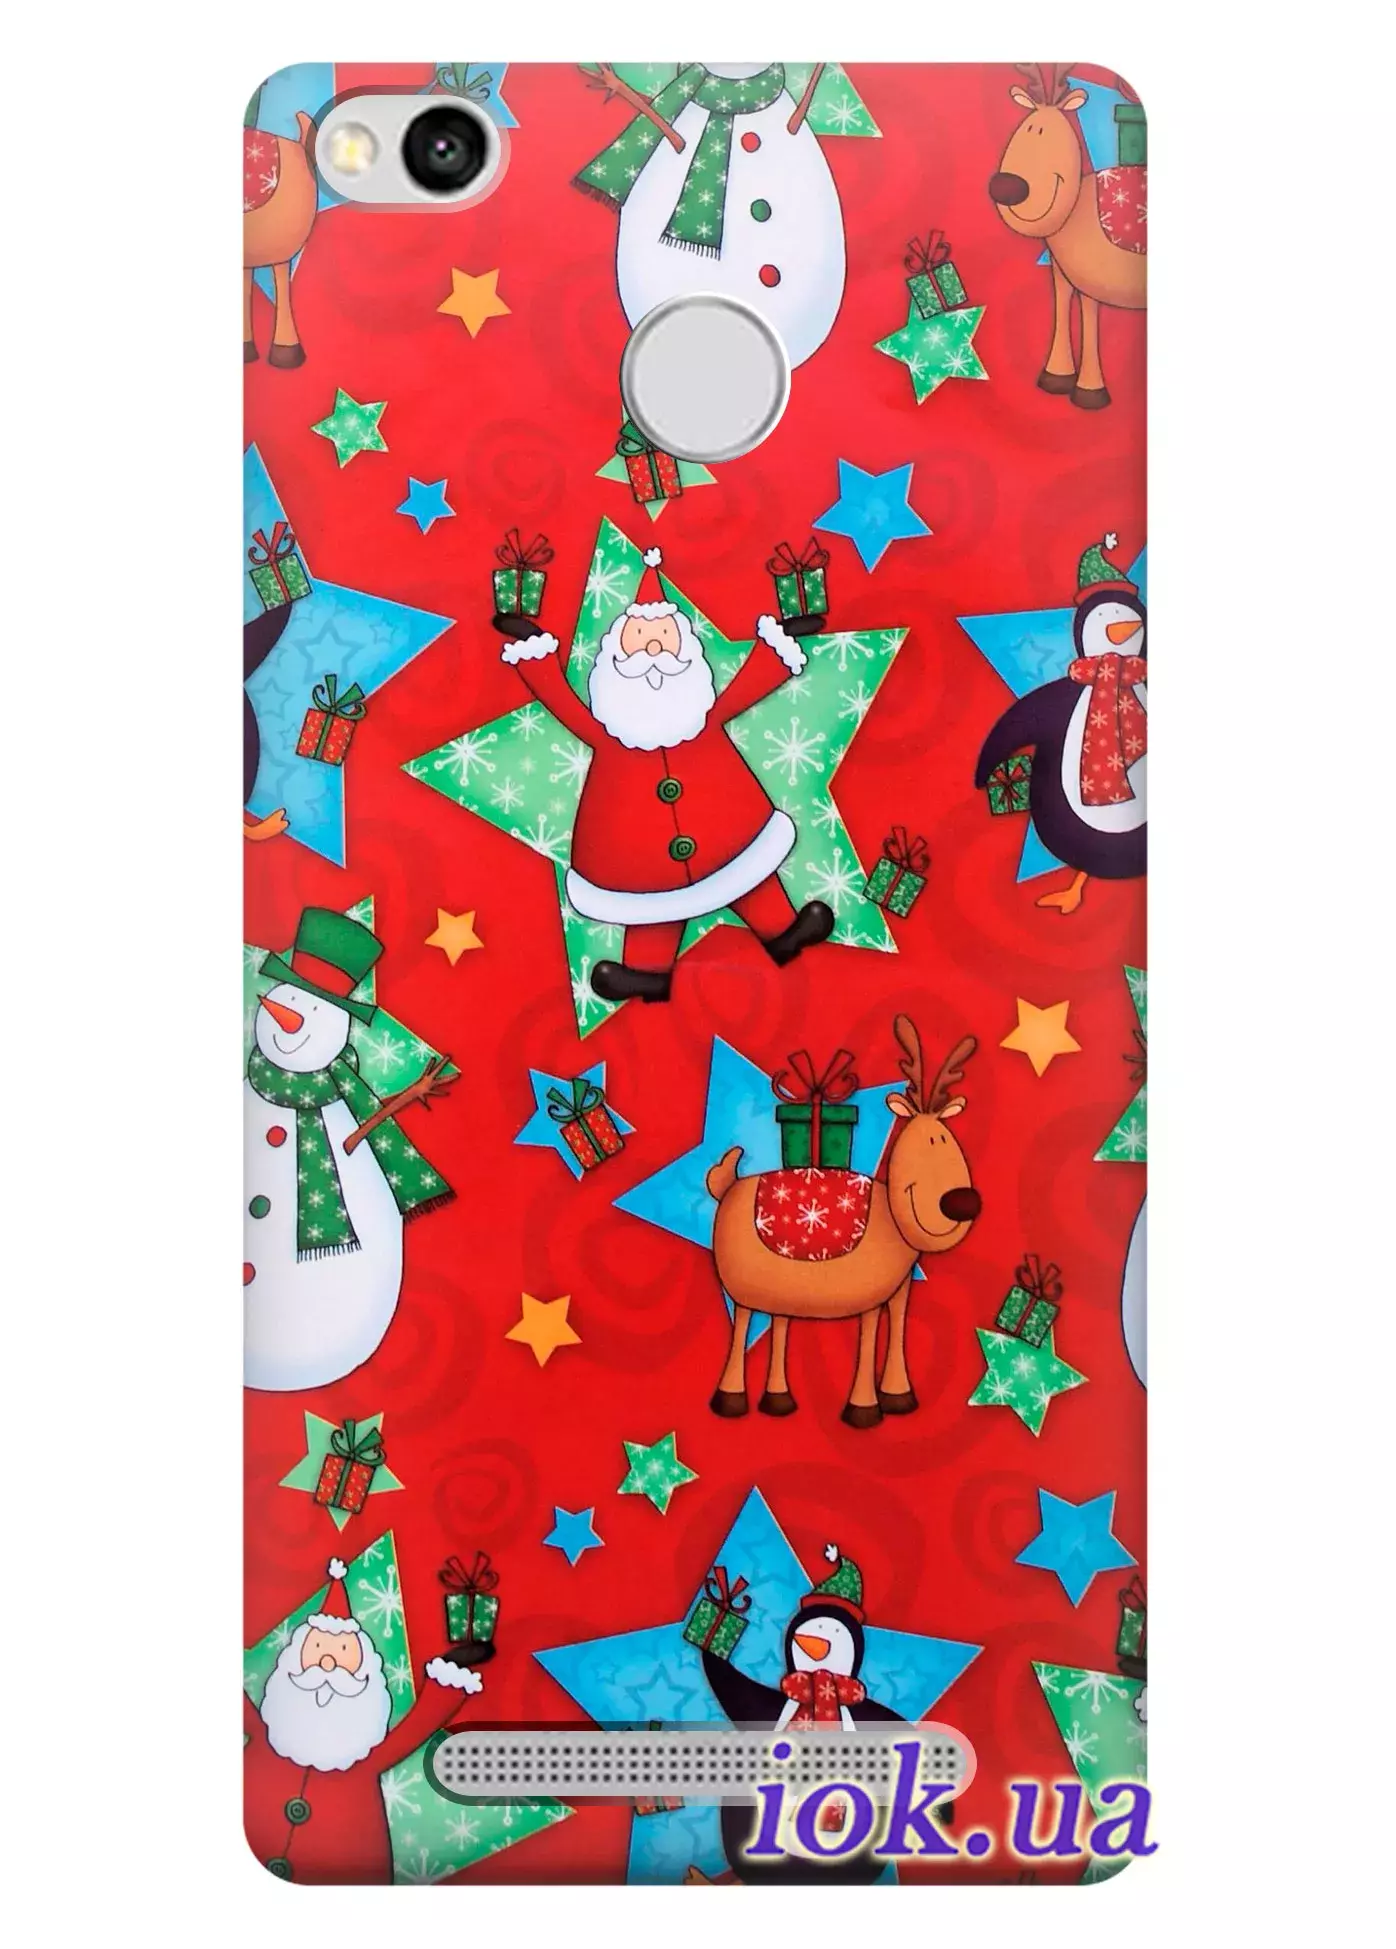 Чехол для Xiaomi Redmi 3S Prime - Новогодние персонажи